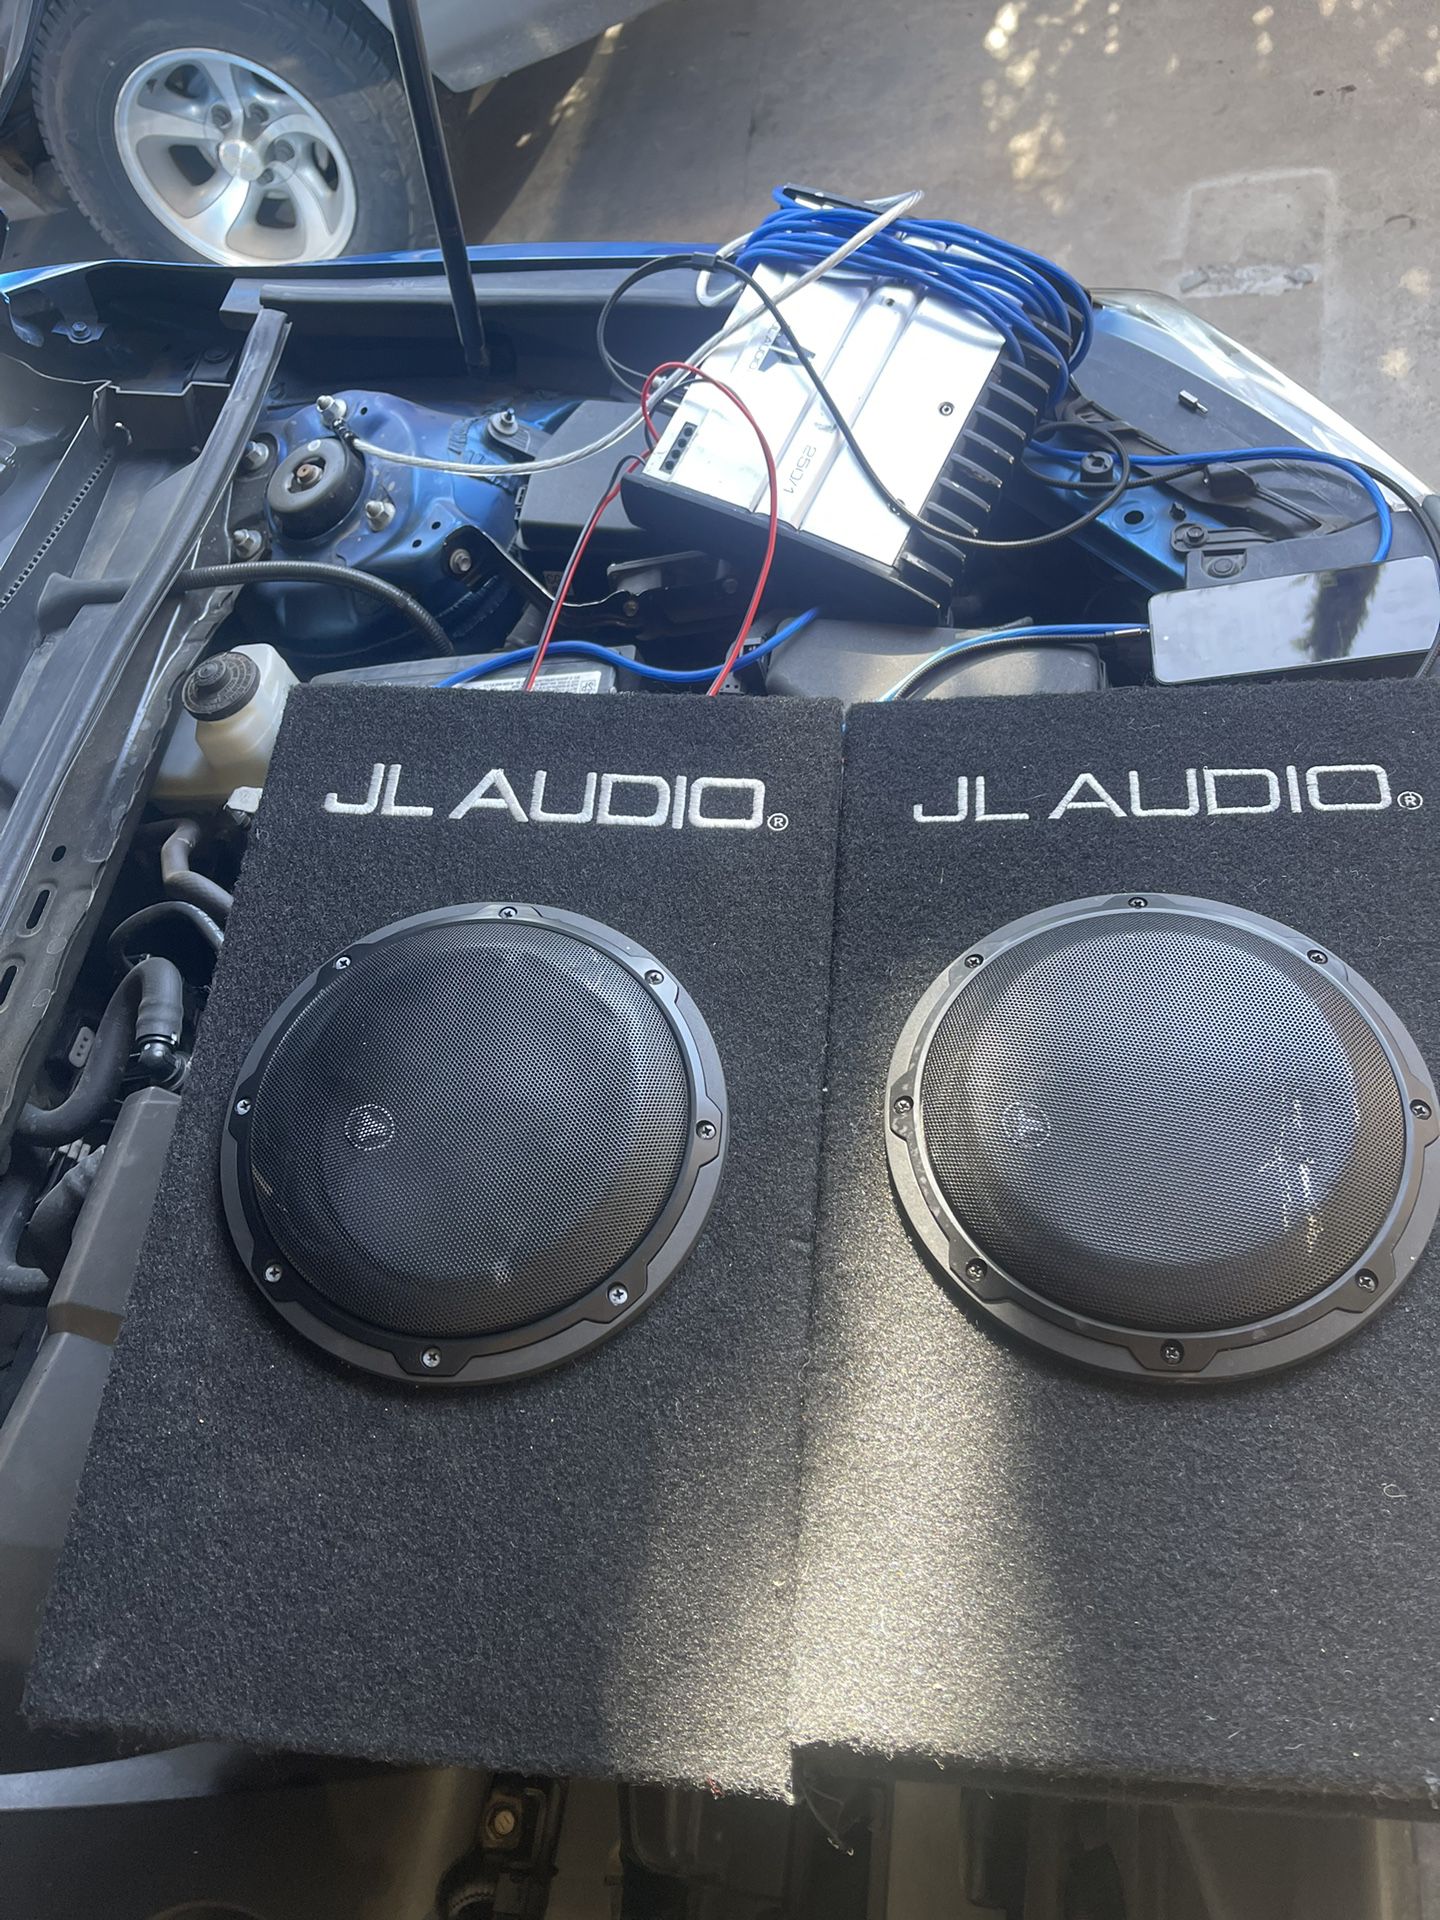 Jl Audio Subwoofers And Amp